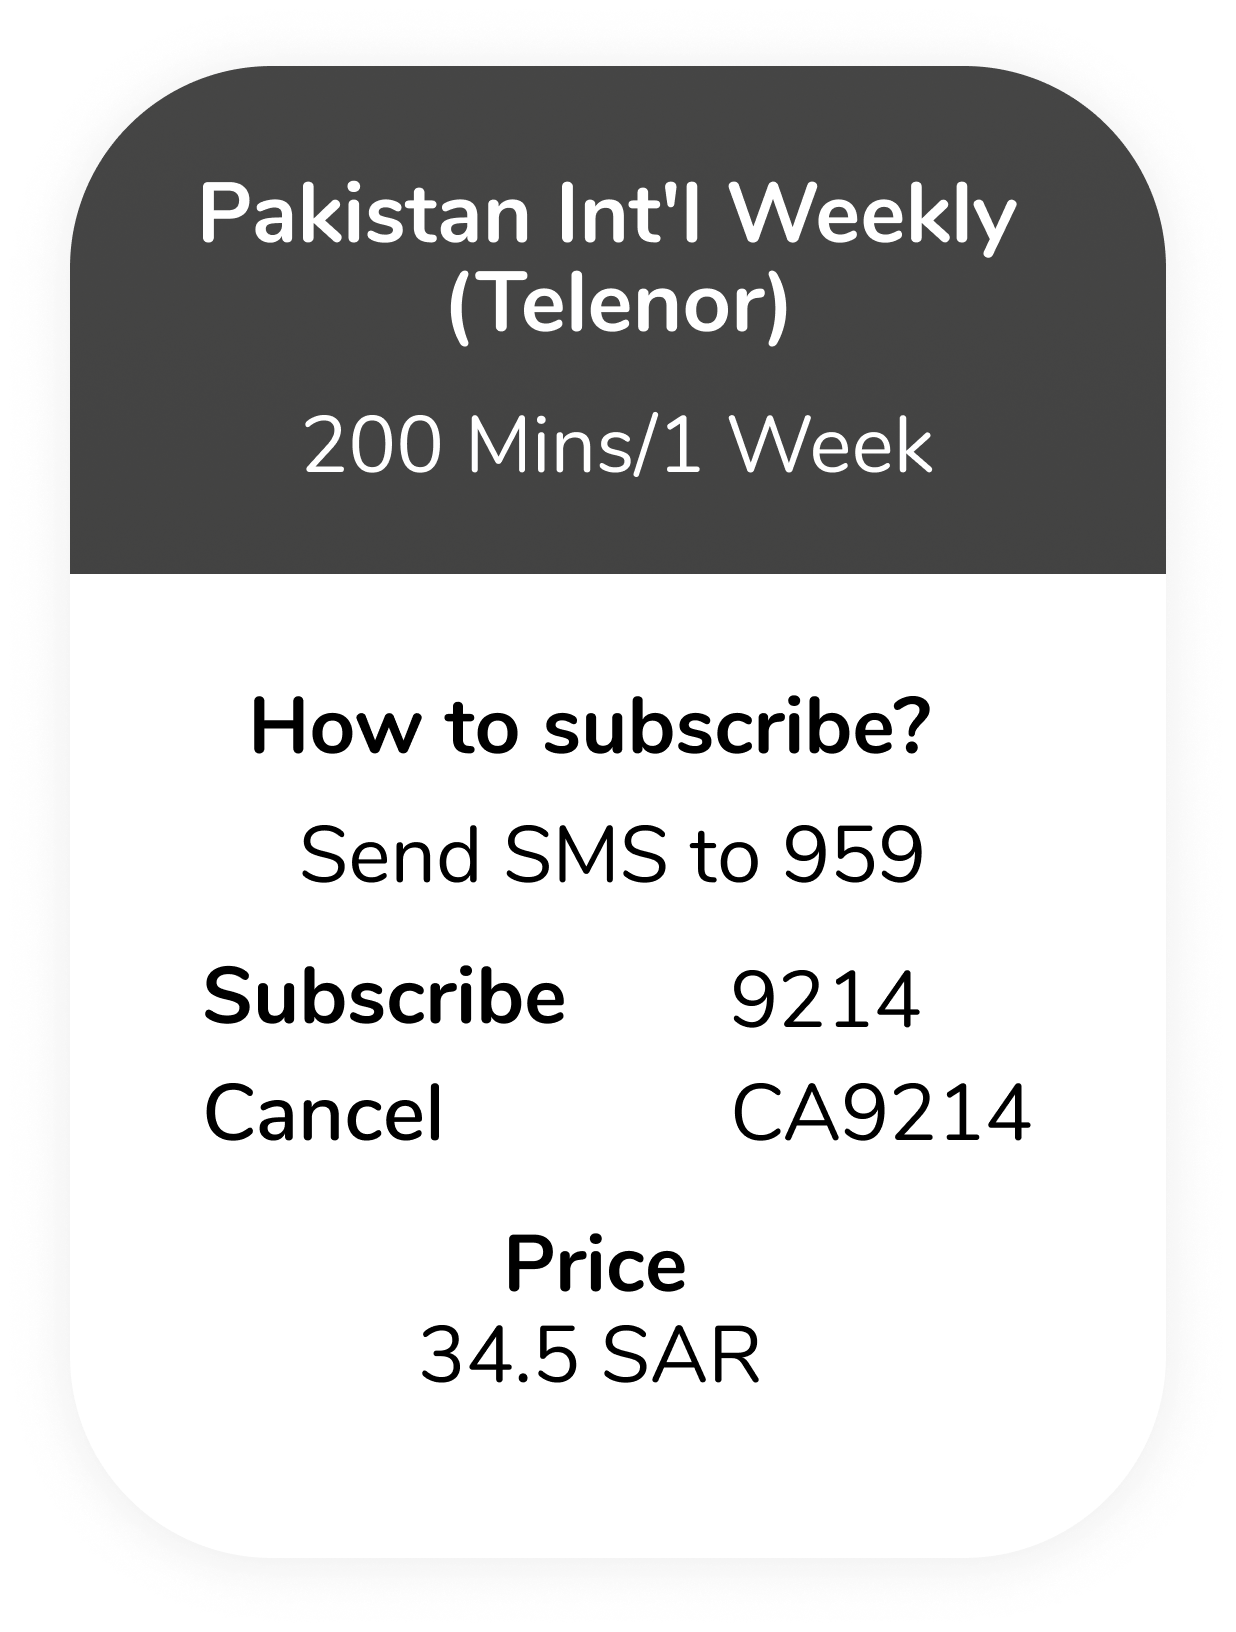 Pakistan Telenor Weekly